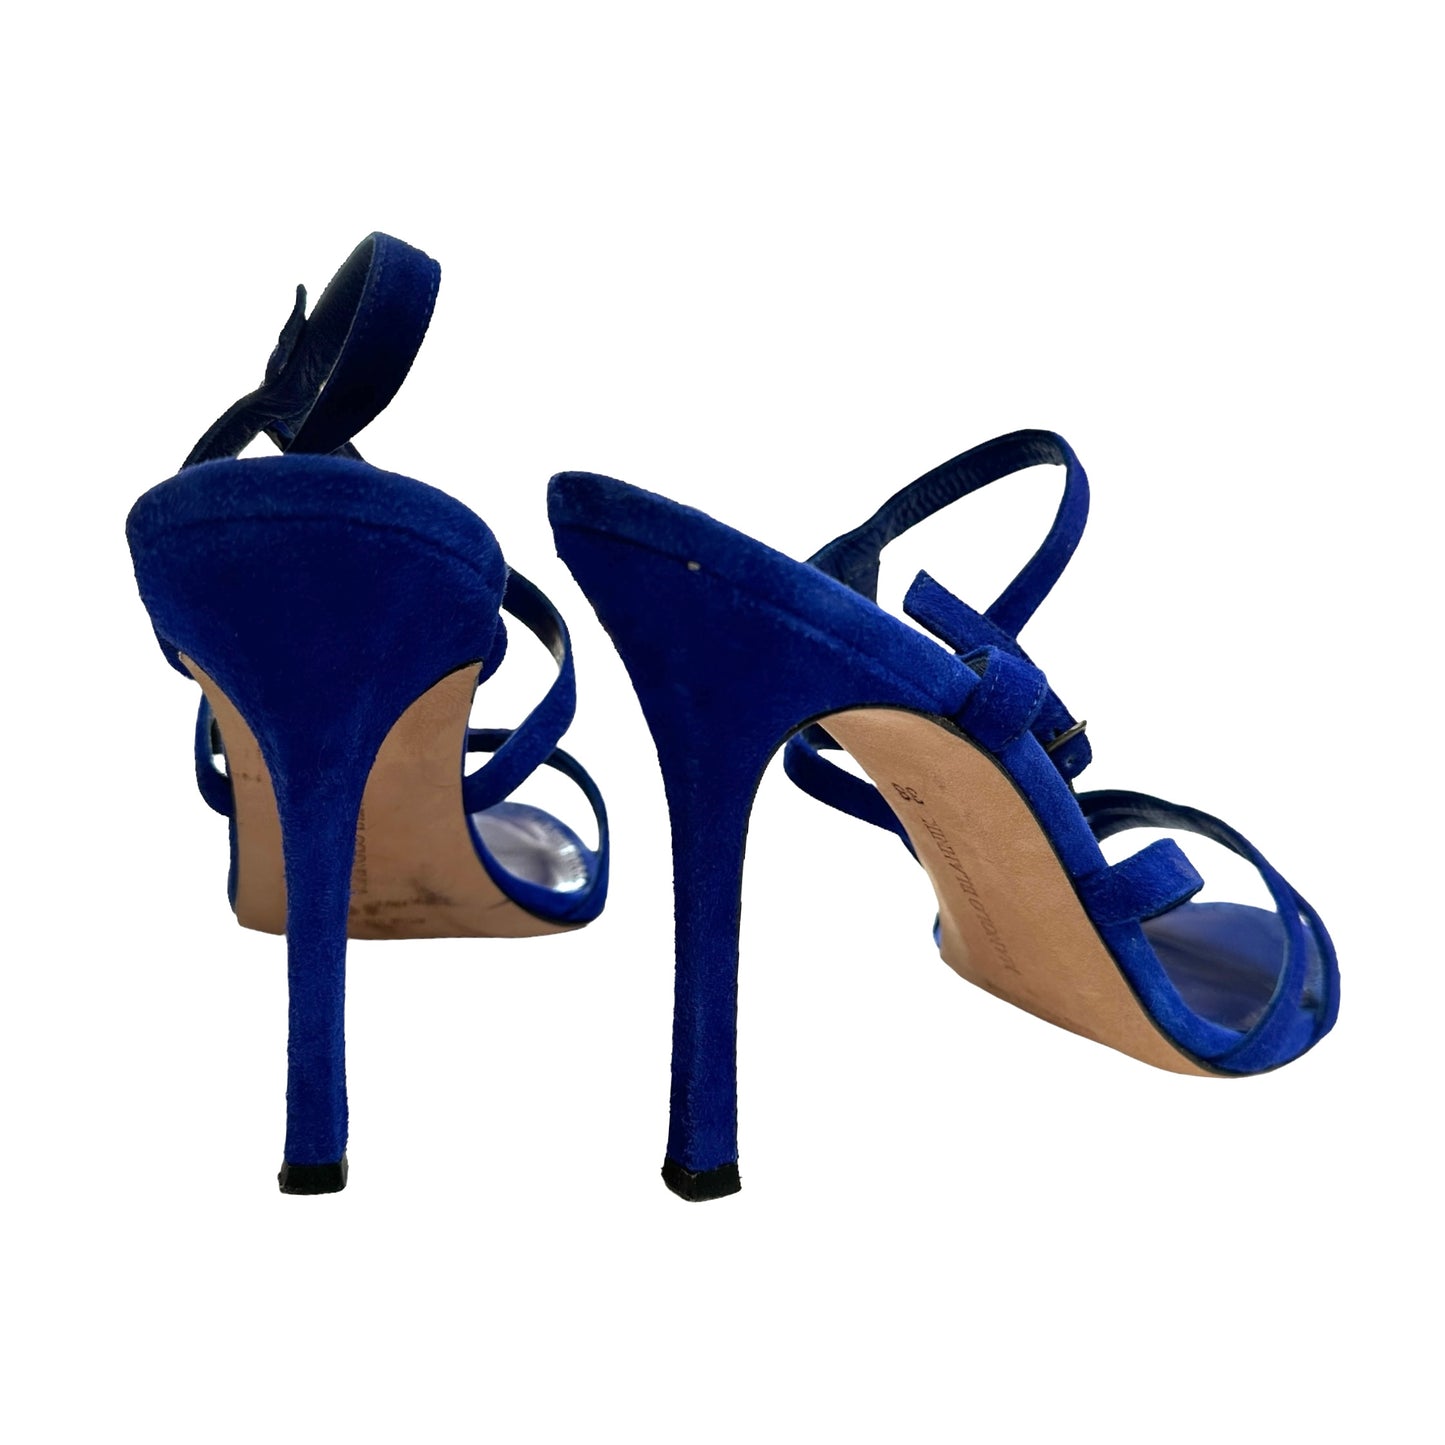 Blue Suede High Heels - 8